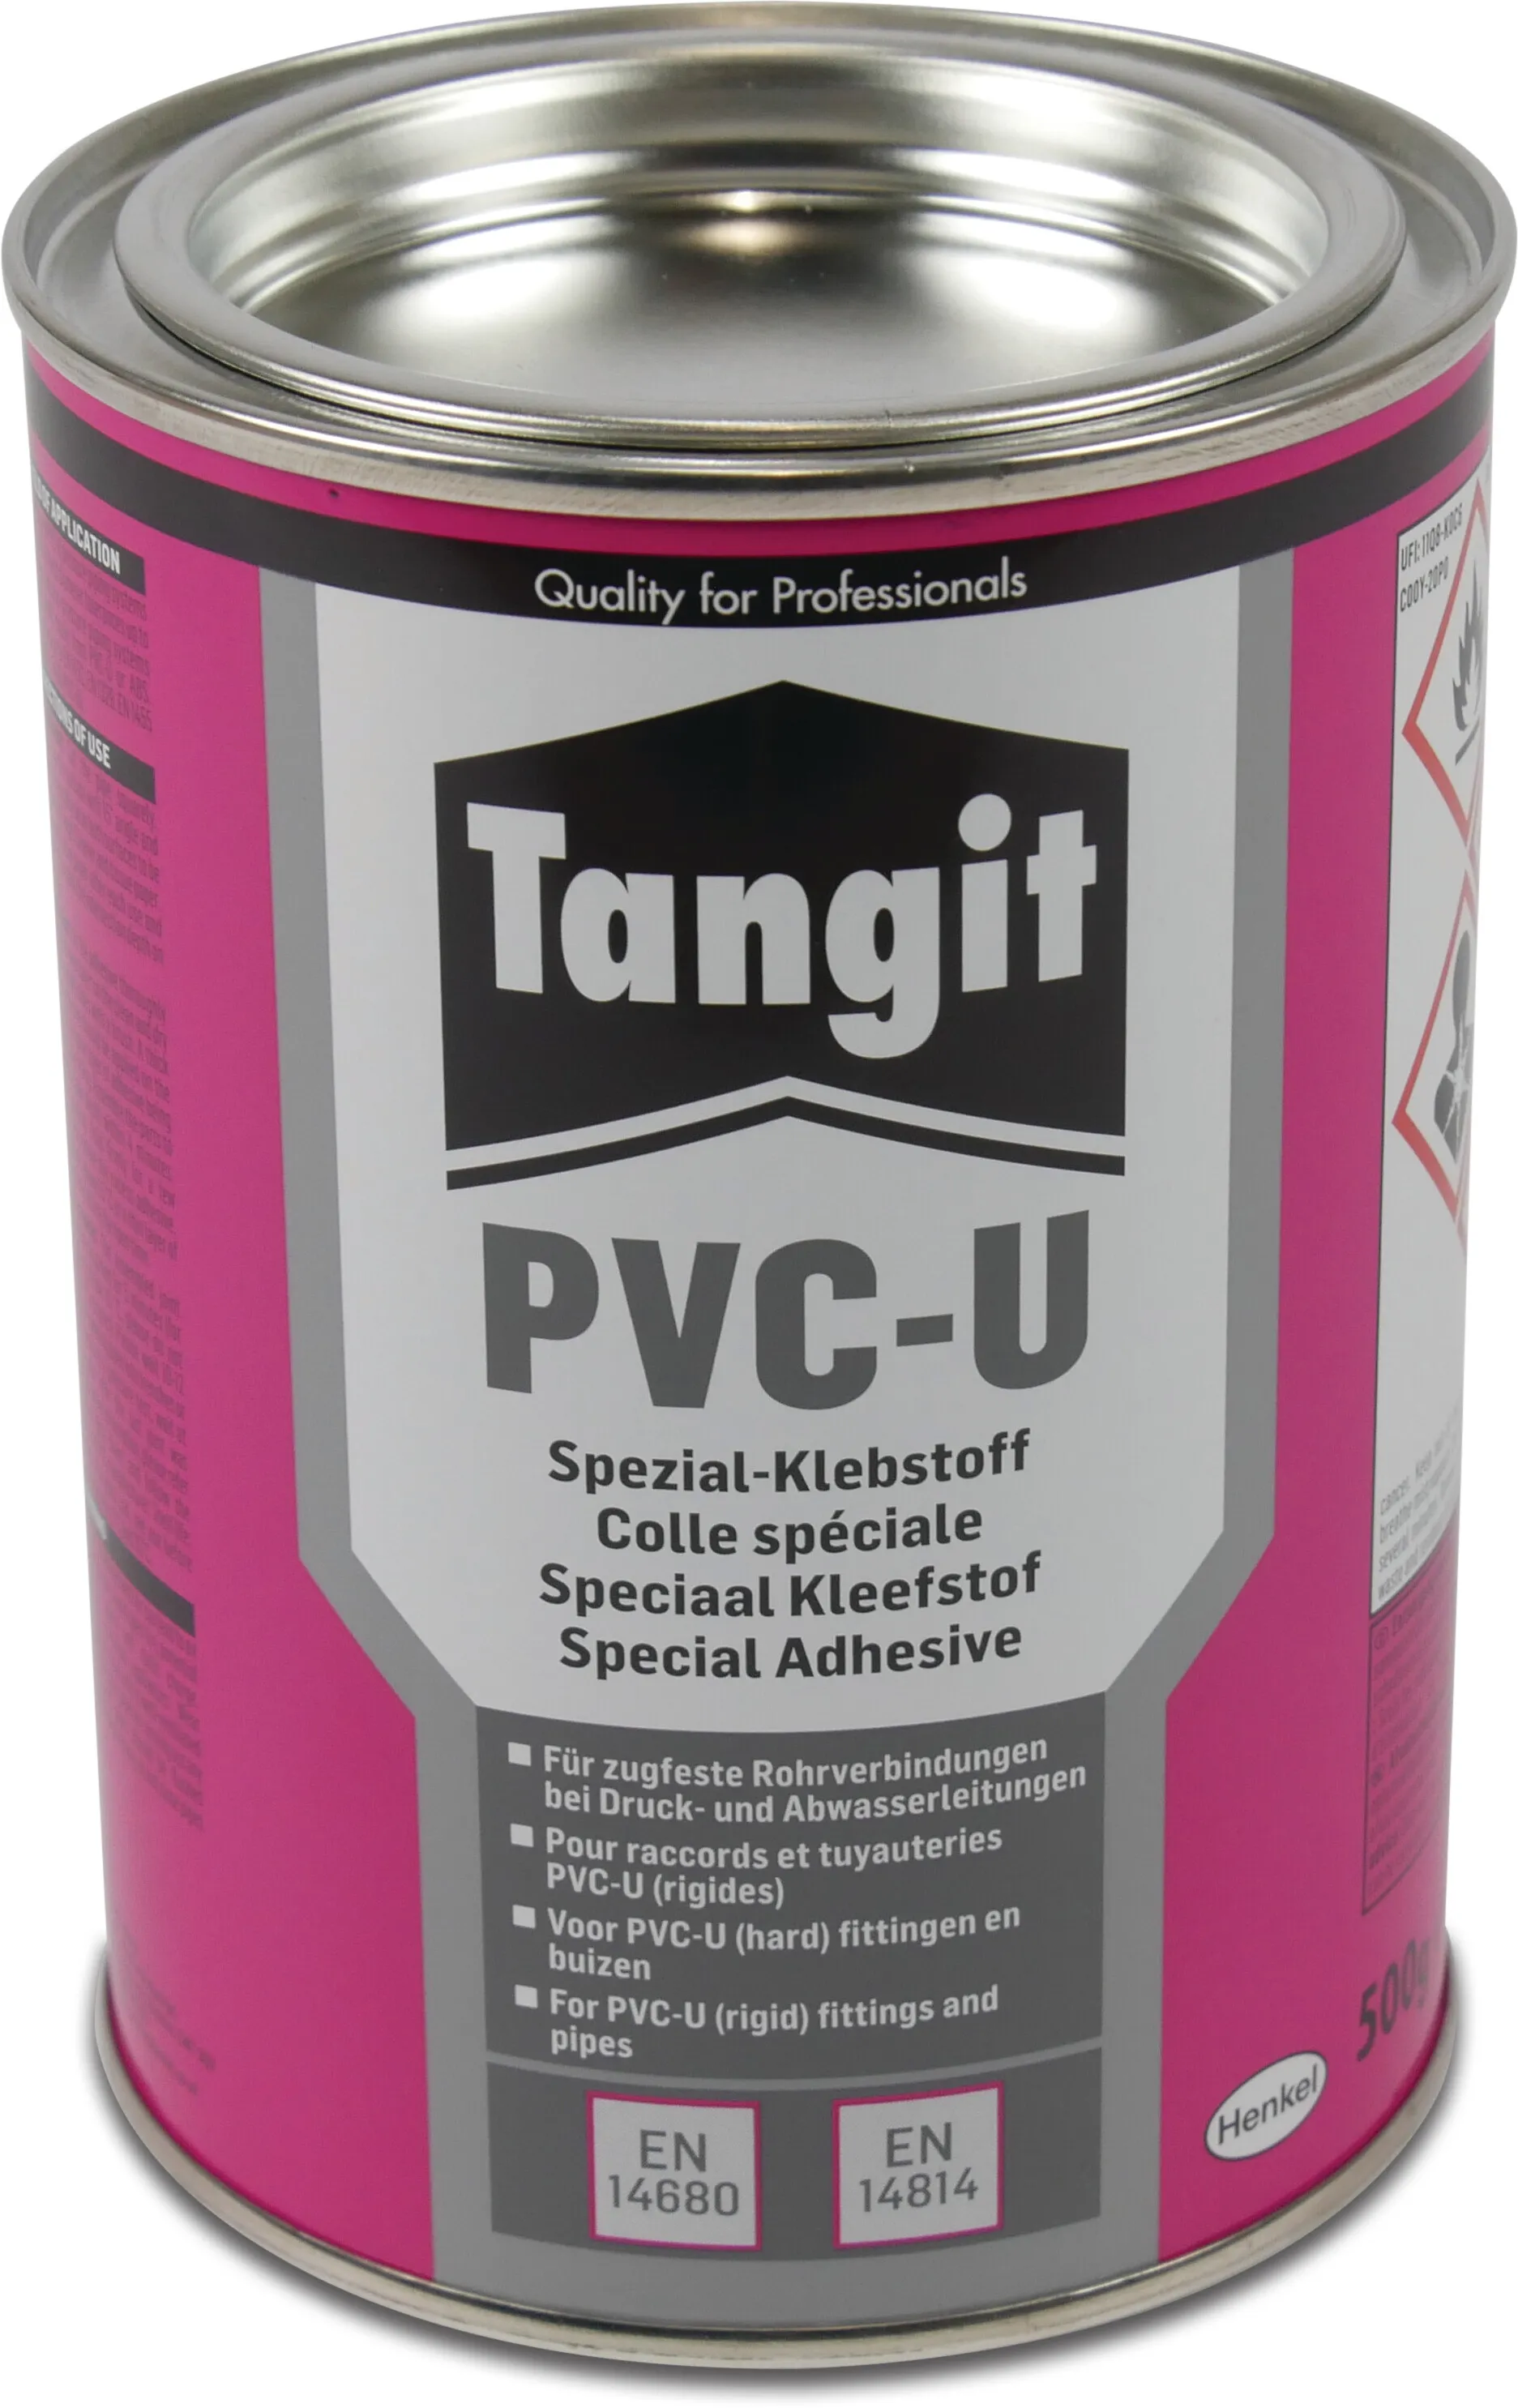 Tangit Colle pour PVC 500g sans brosse KIWA type All Pressure label EN/DE/NL/FR